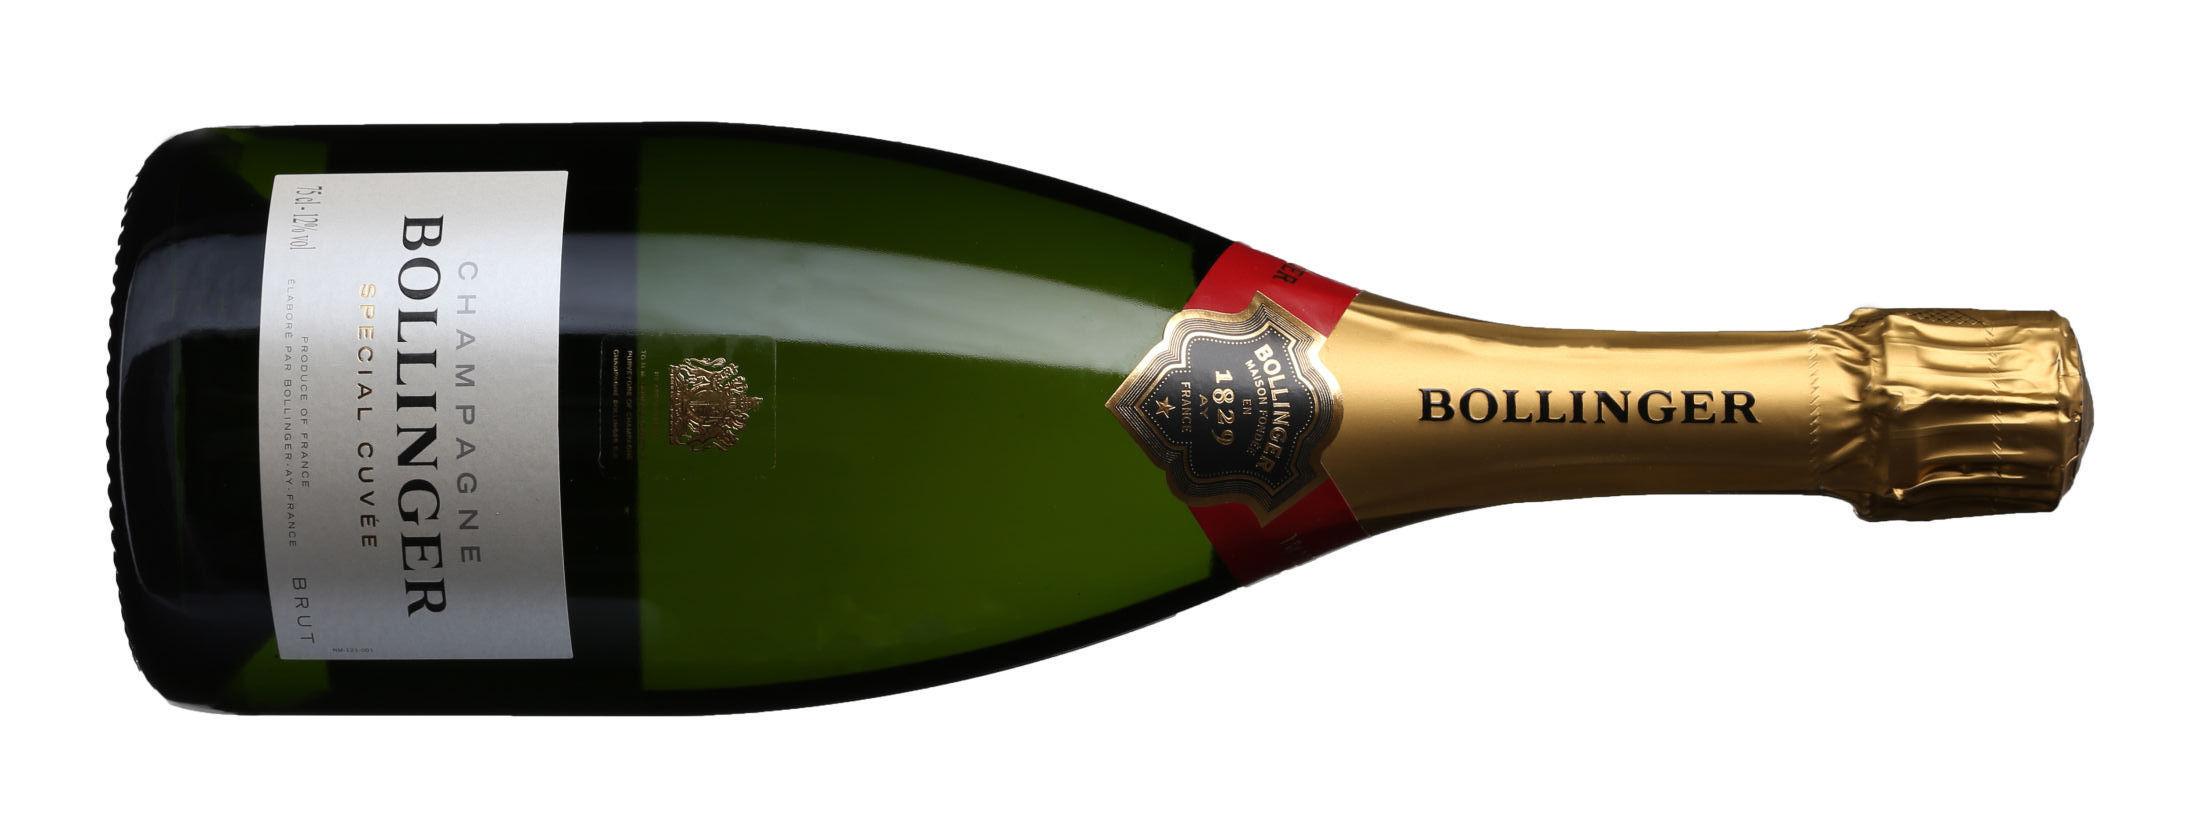 87901 Basisutvalget, kategori 2, Poeng 90, Land/region: Frankrike, Champagne